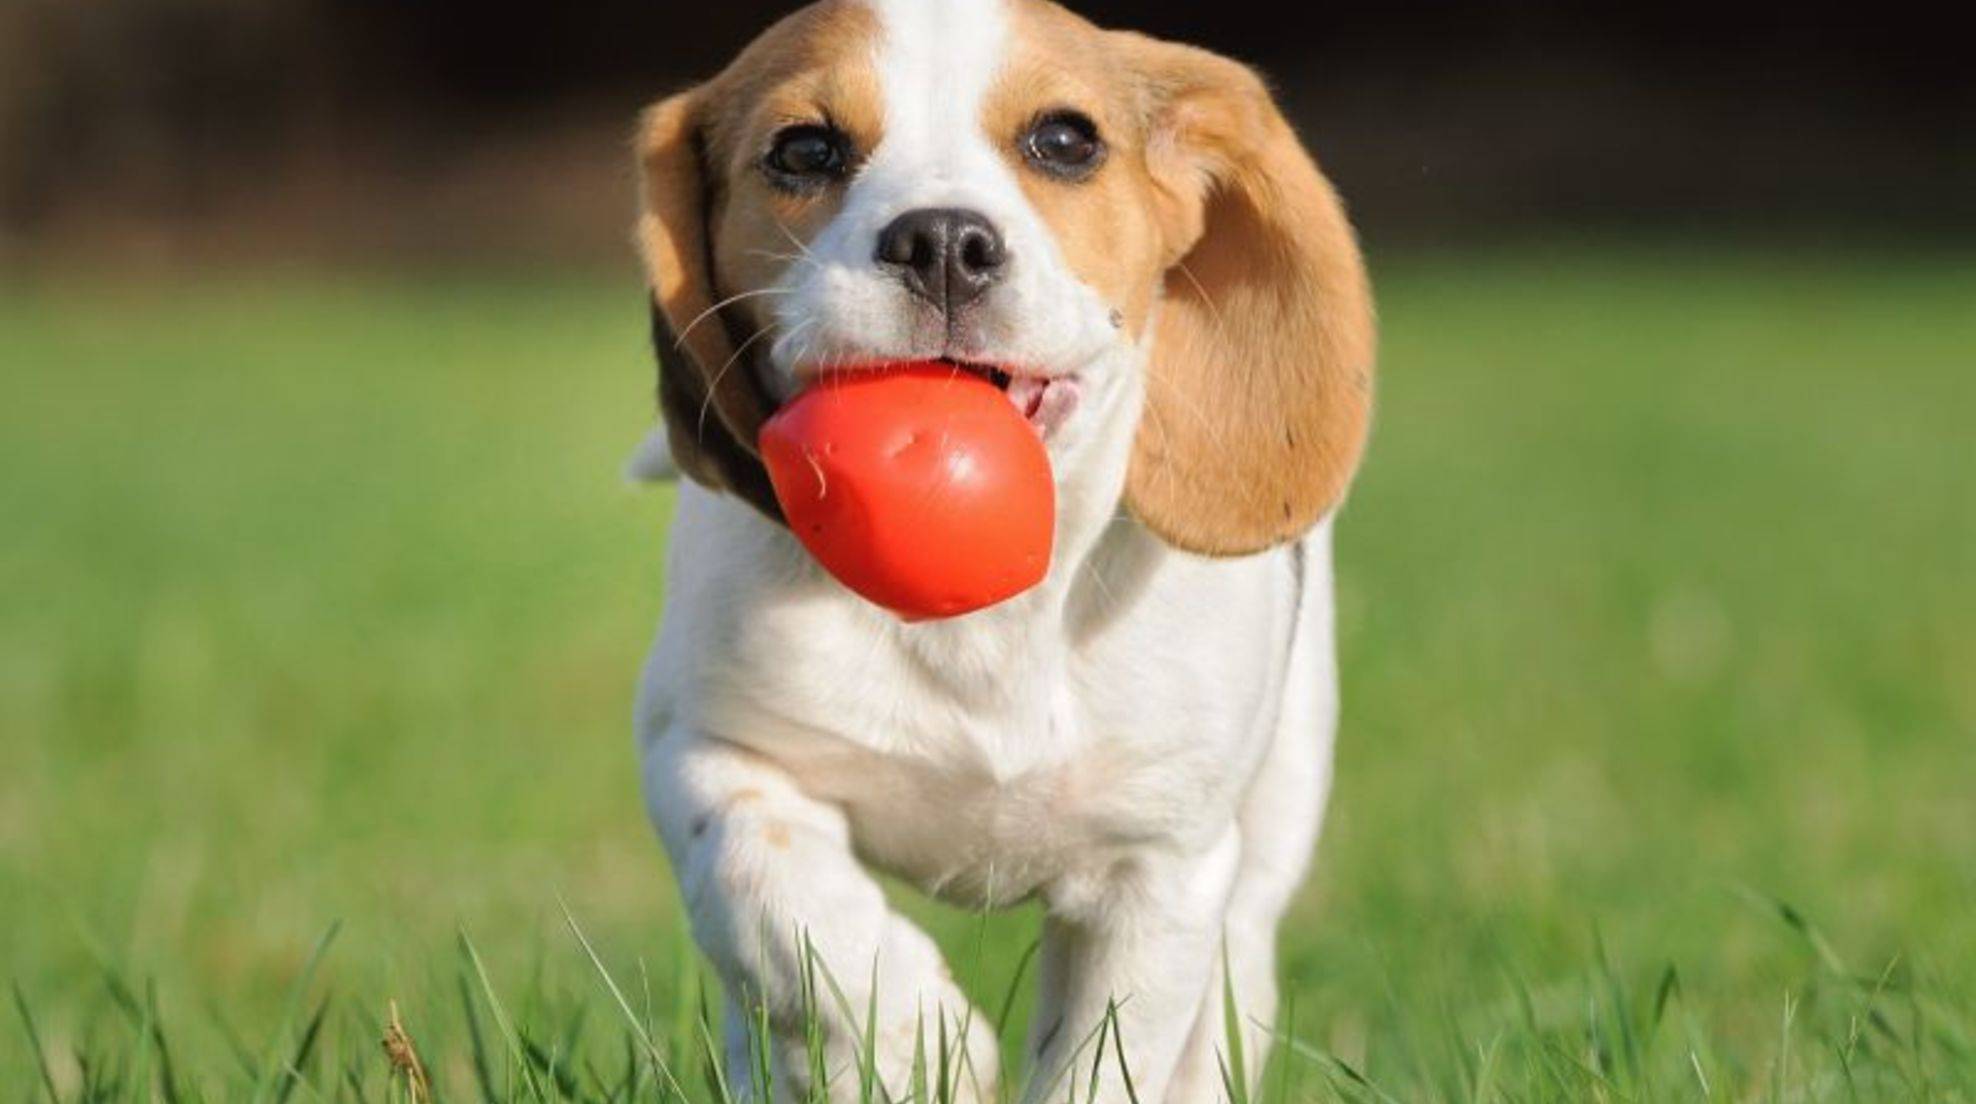 Buy fetch toys for dogs: fun guaranteed!